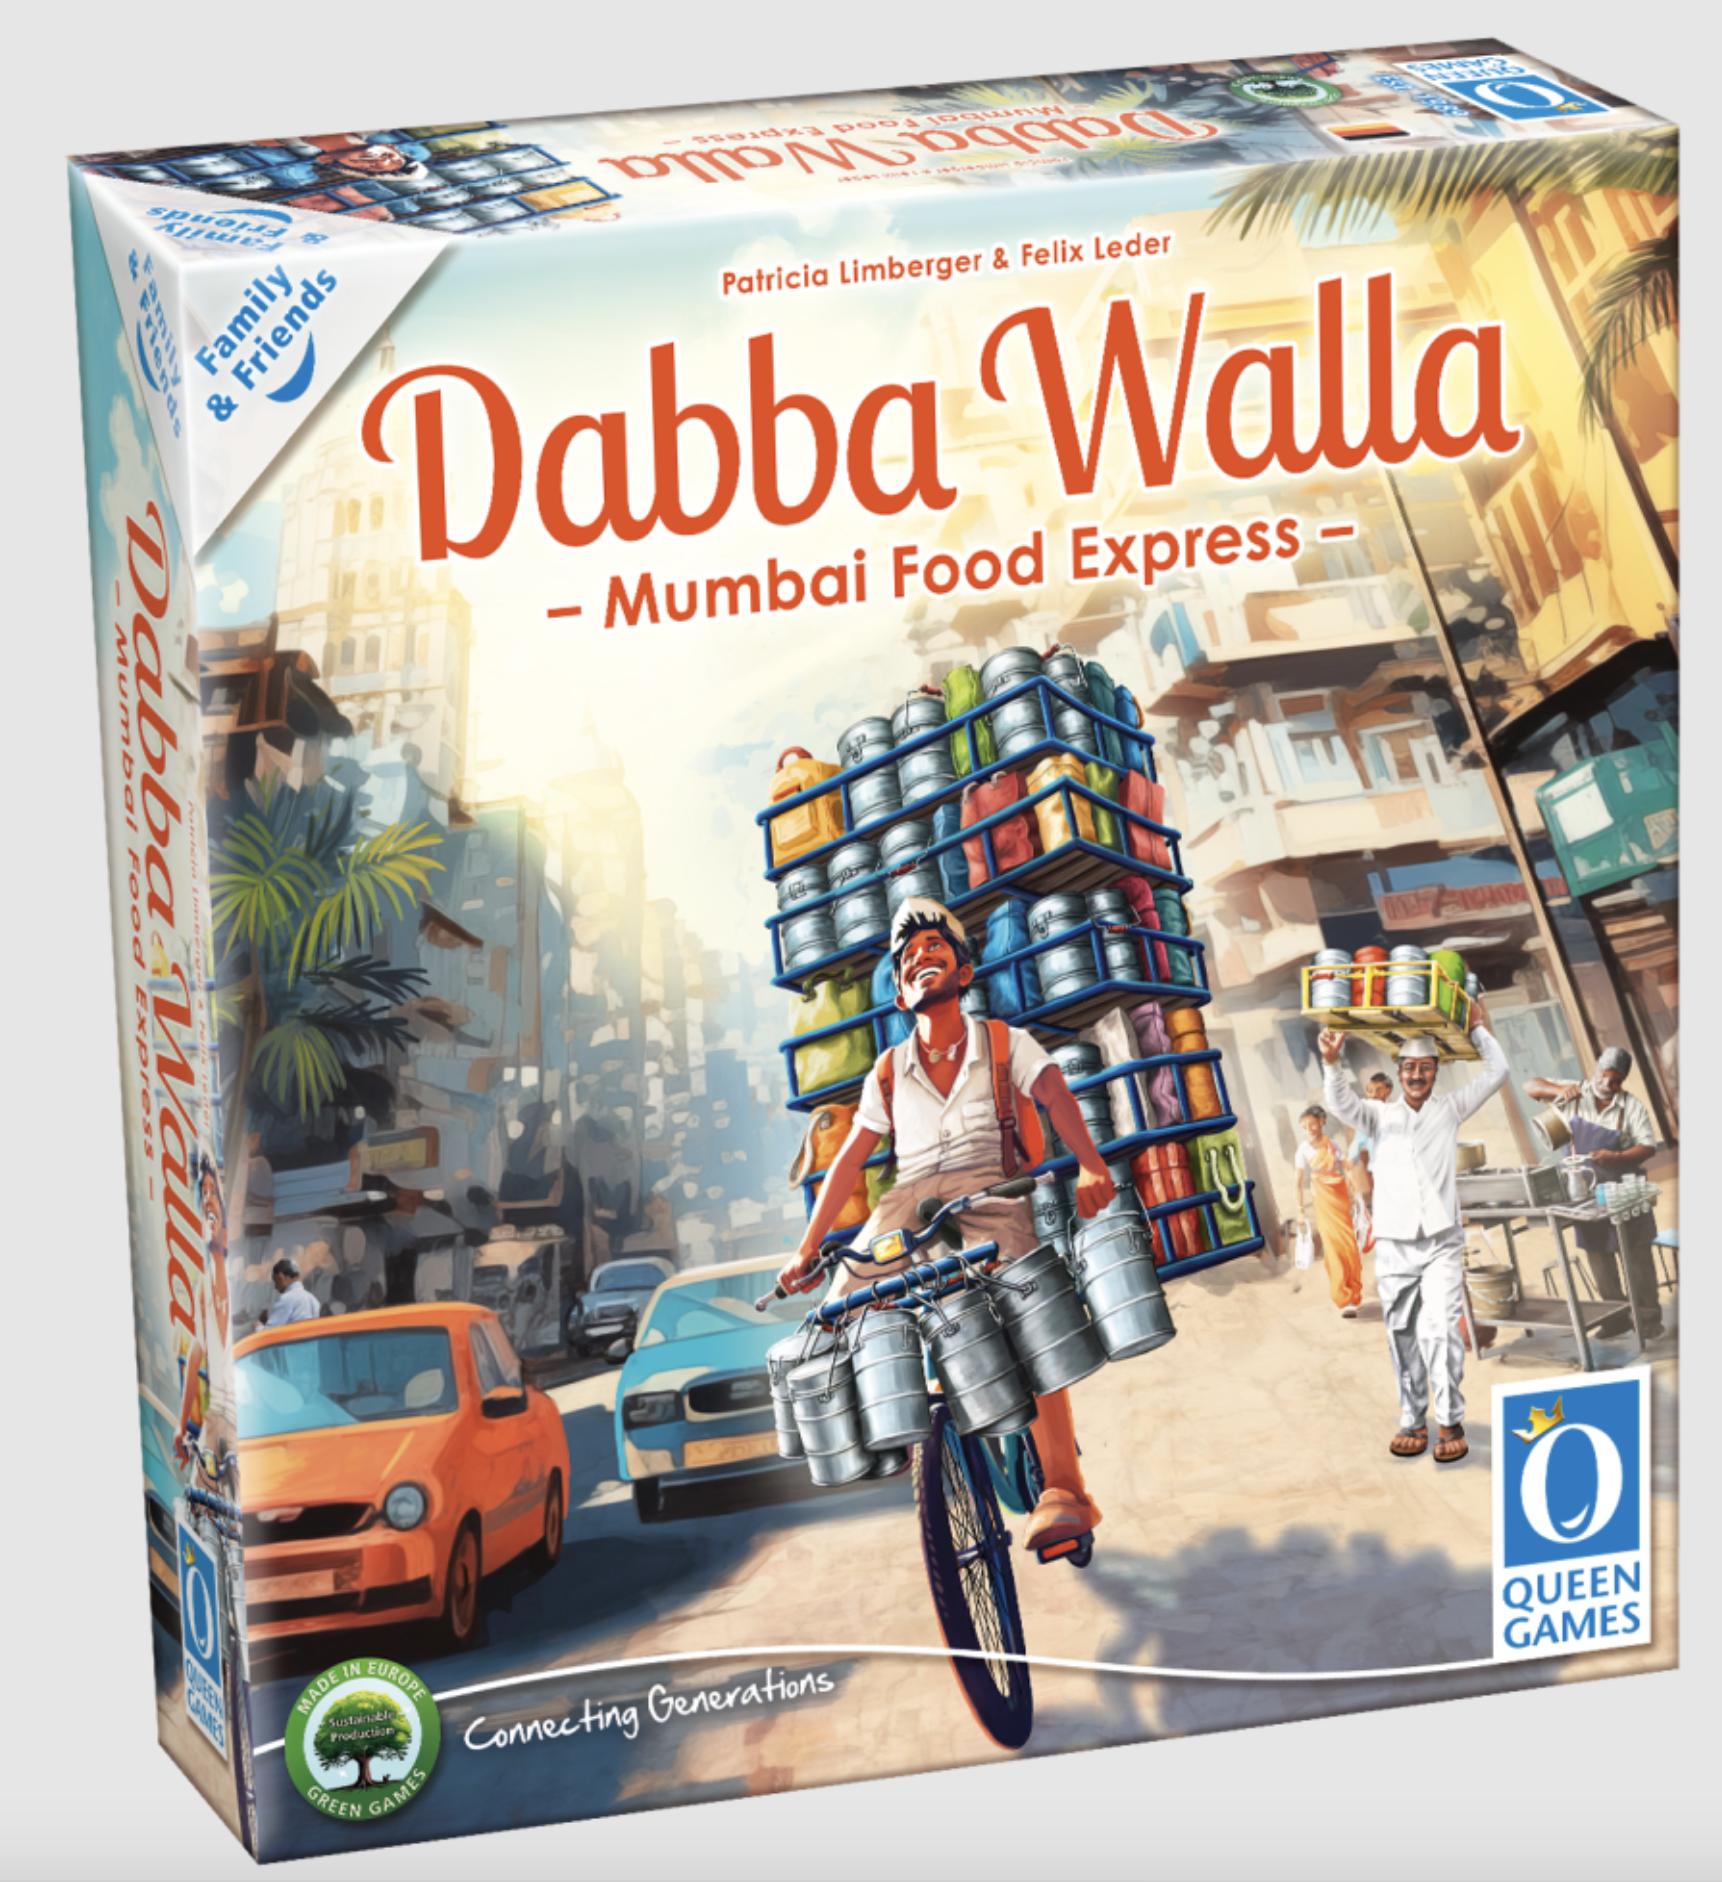 Dabba Walla - Mumbai Food Express